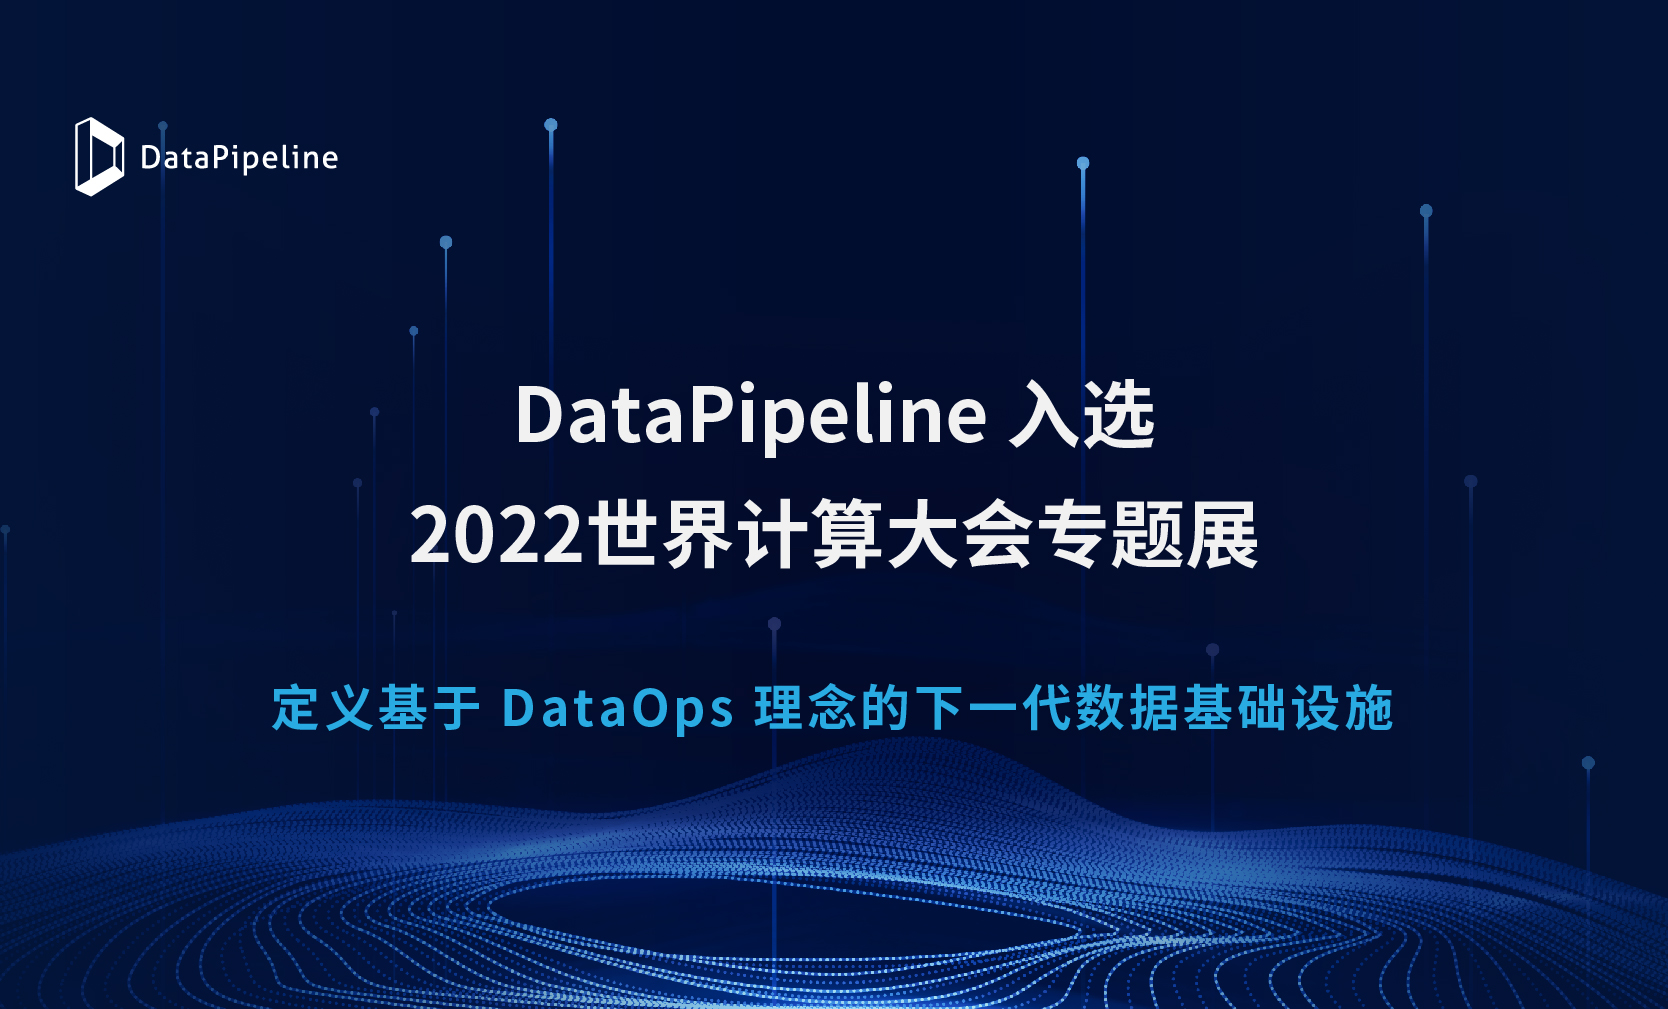 DataPipeline亮相2022世界计算大会！定义基于DataOps理念的下一代数据基础设施